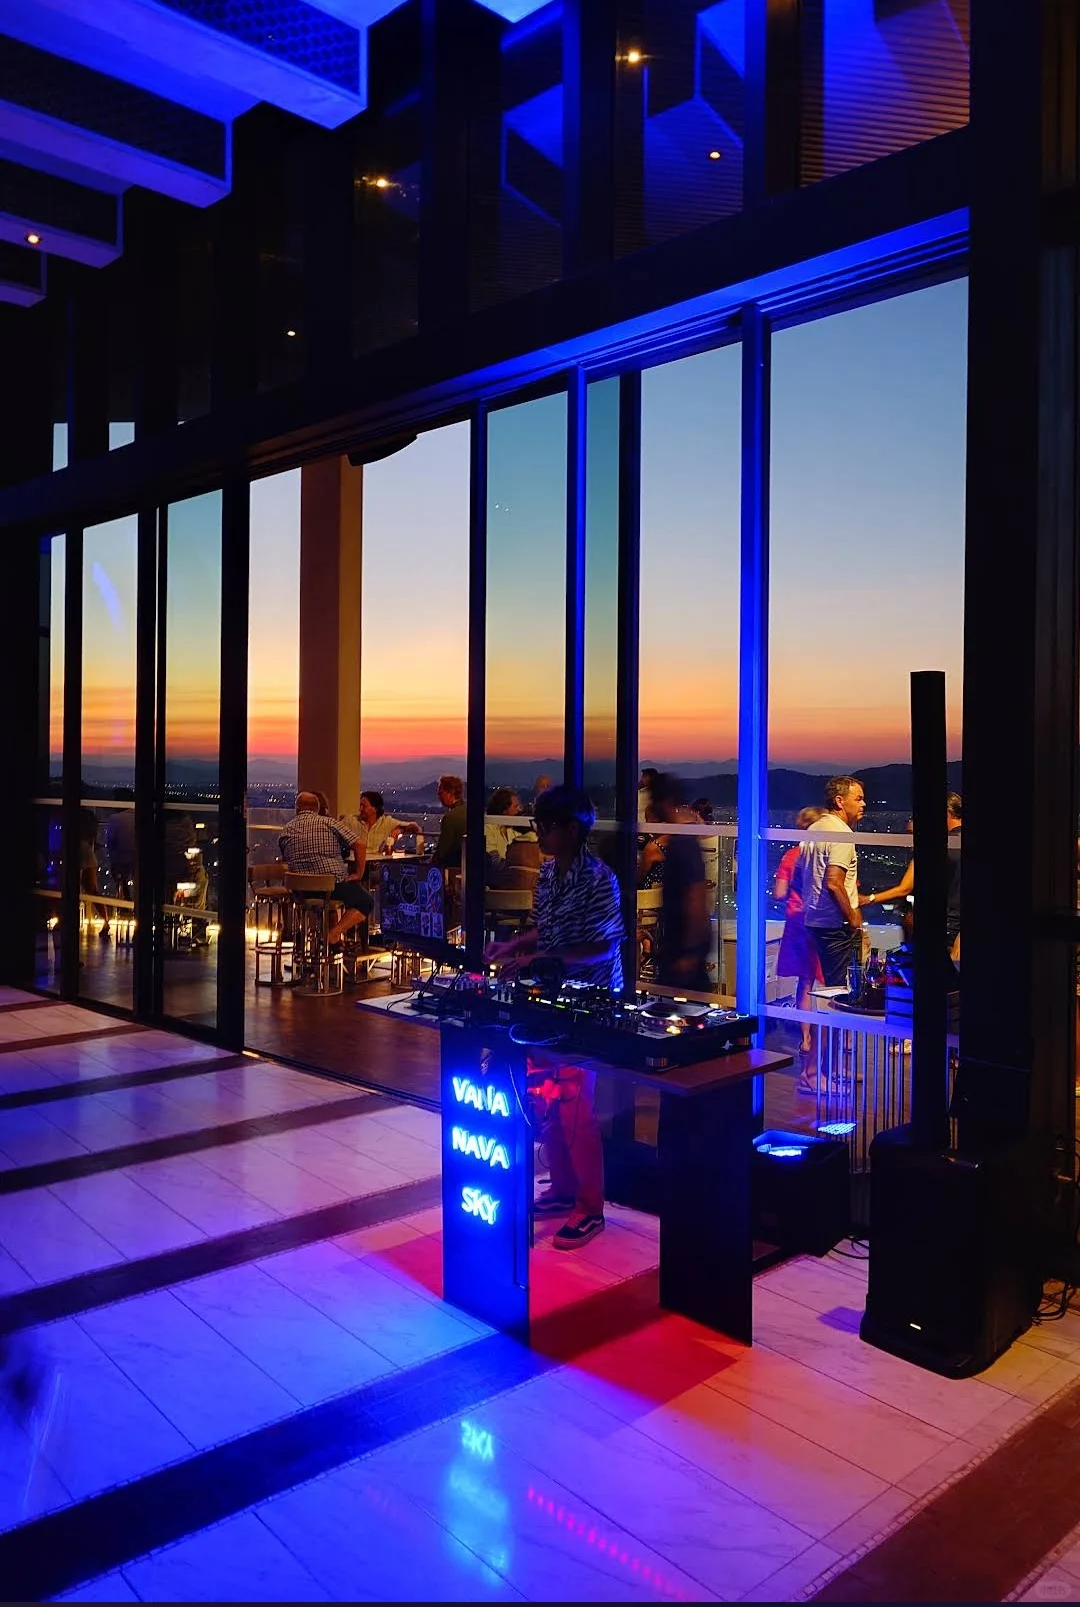 HuaHin-The Sky Bar on the top floor of Holiday Inn has a super beautiful sunset